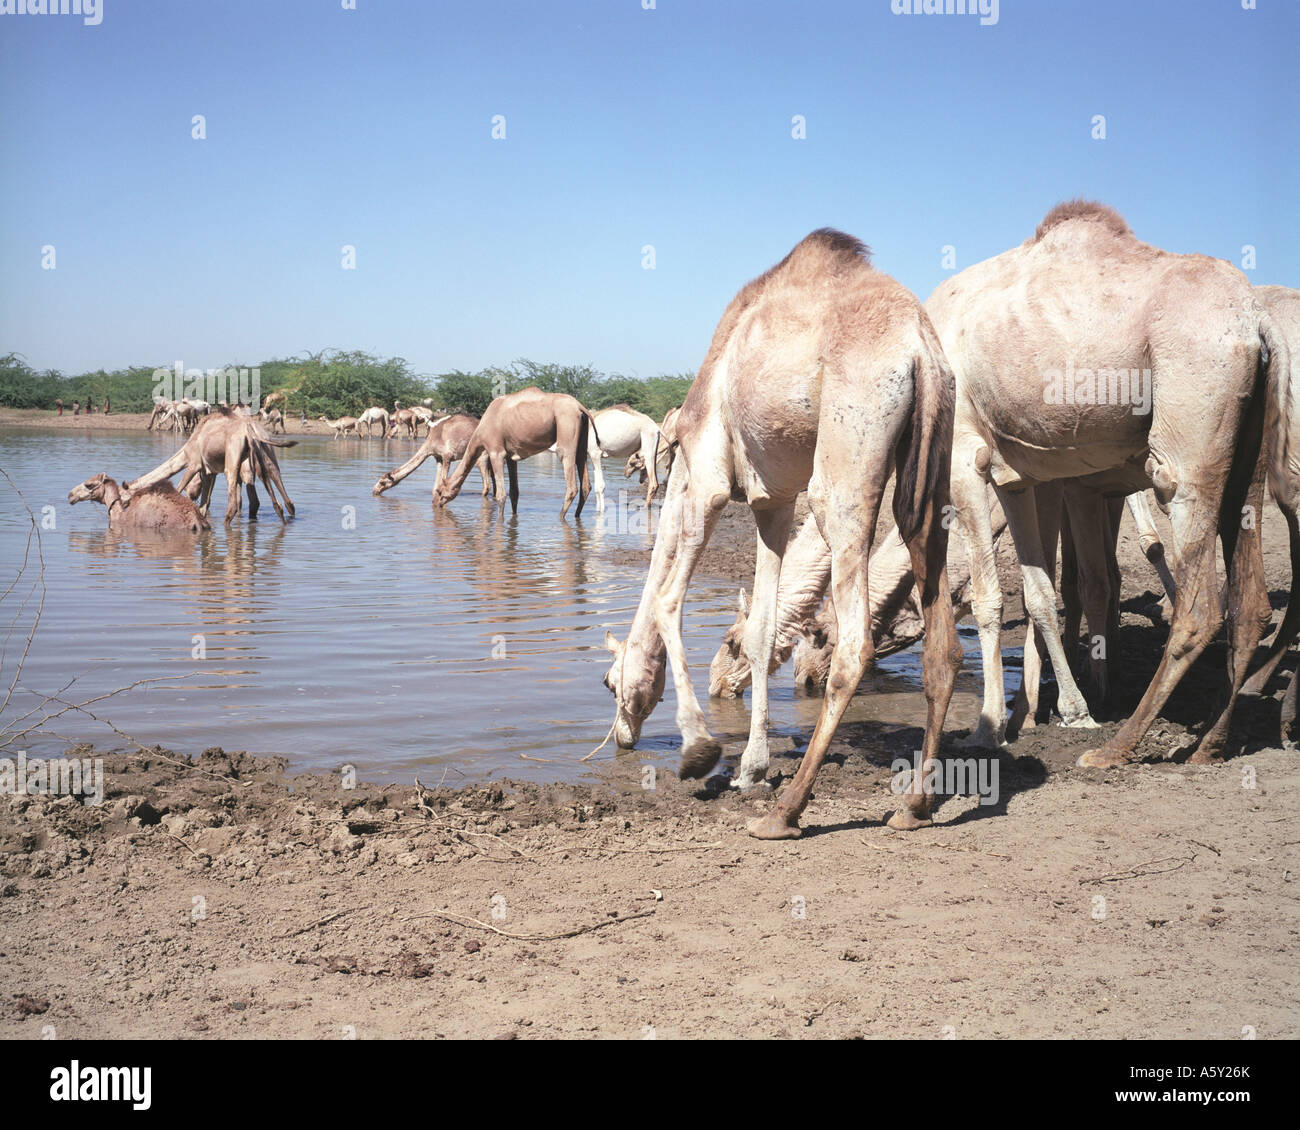 Camels Kassala mountain, Eastern Sudan Stock Photo